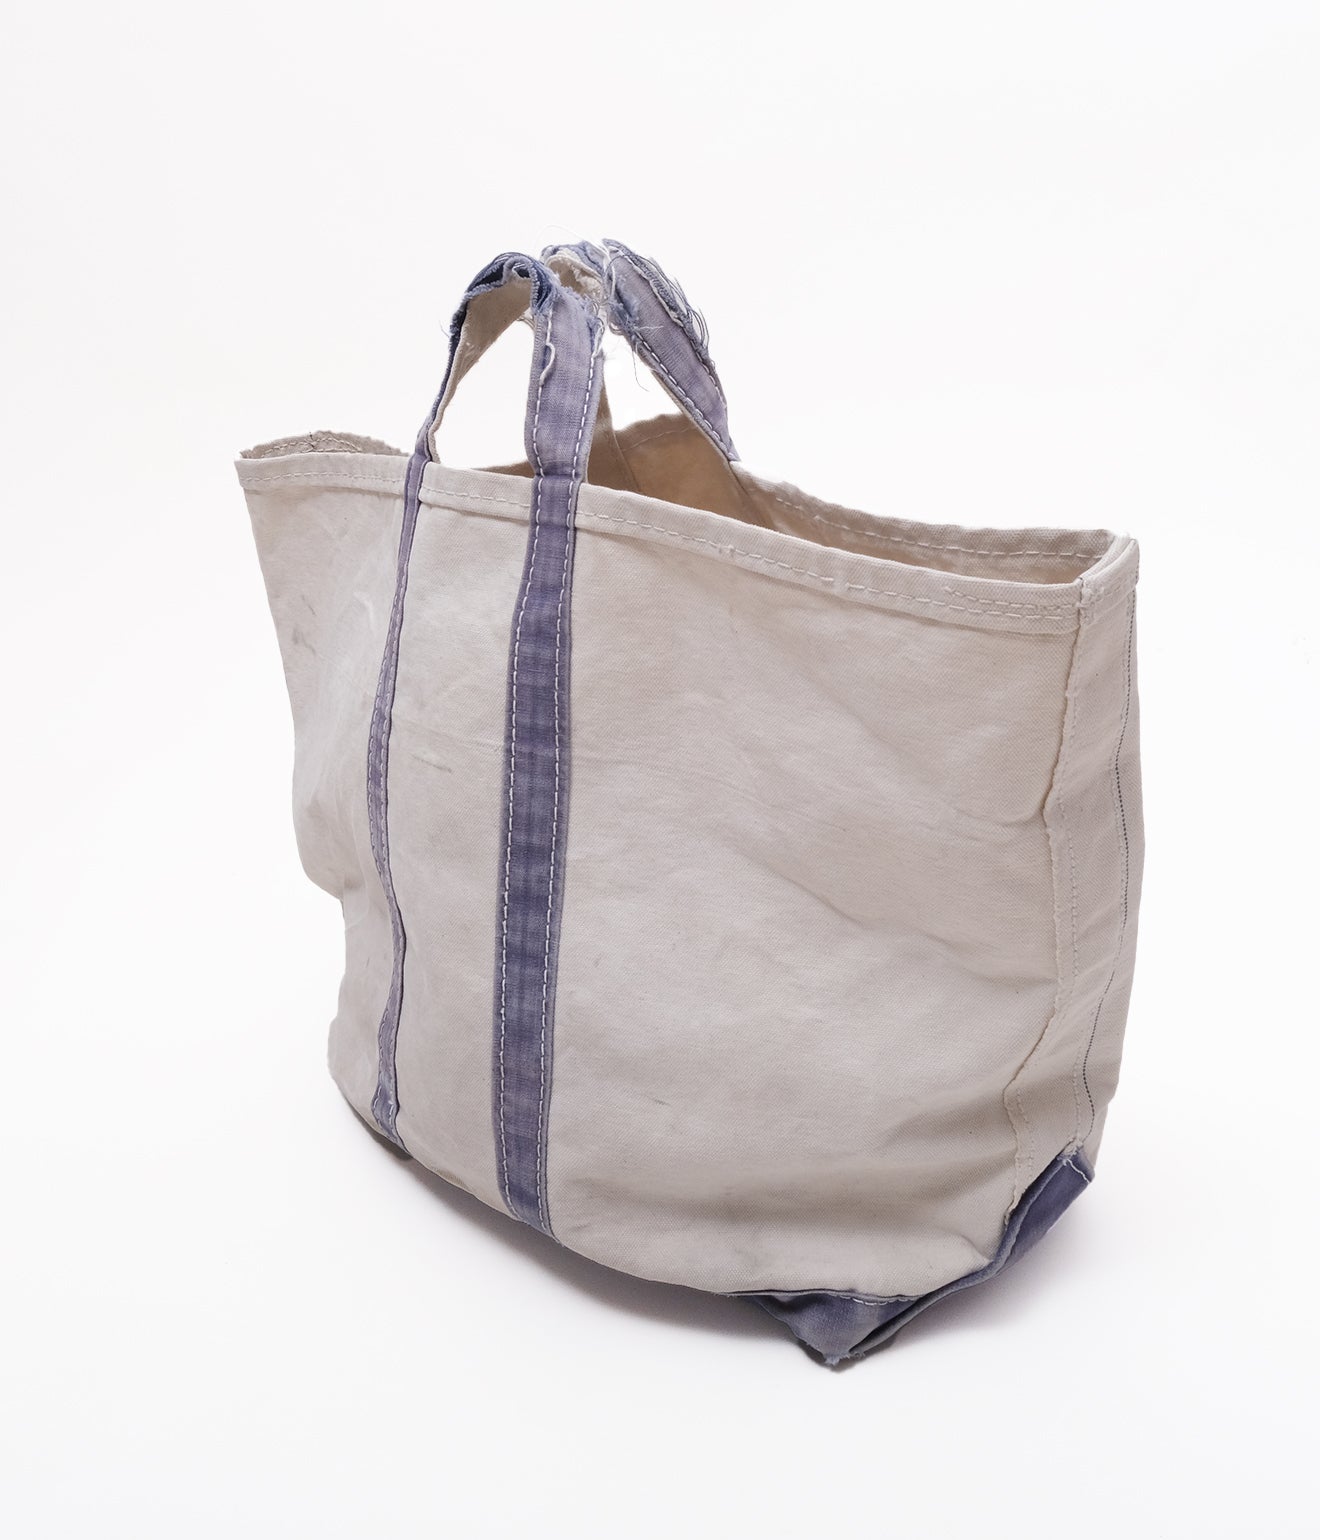 70's LLBean Tote Bag (Natural x Navy)